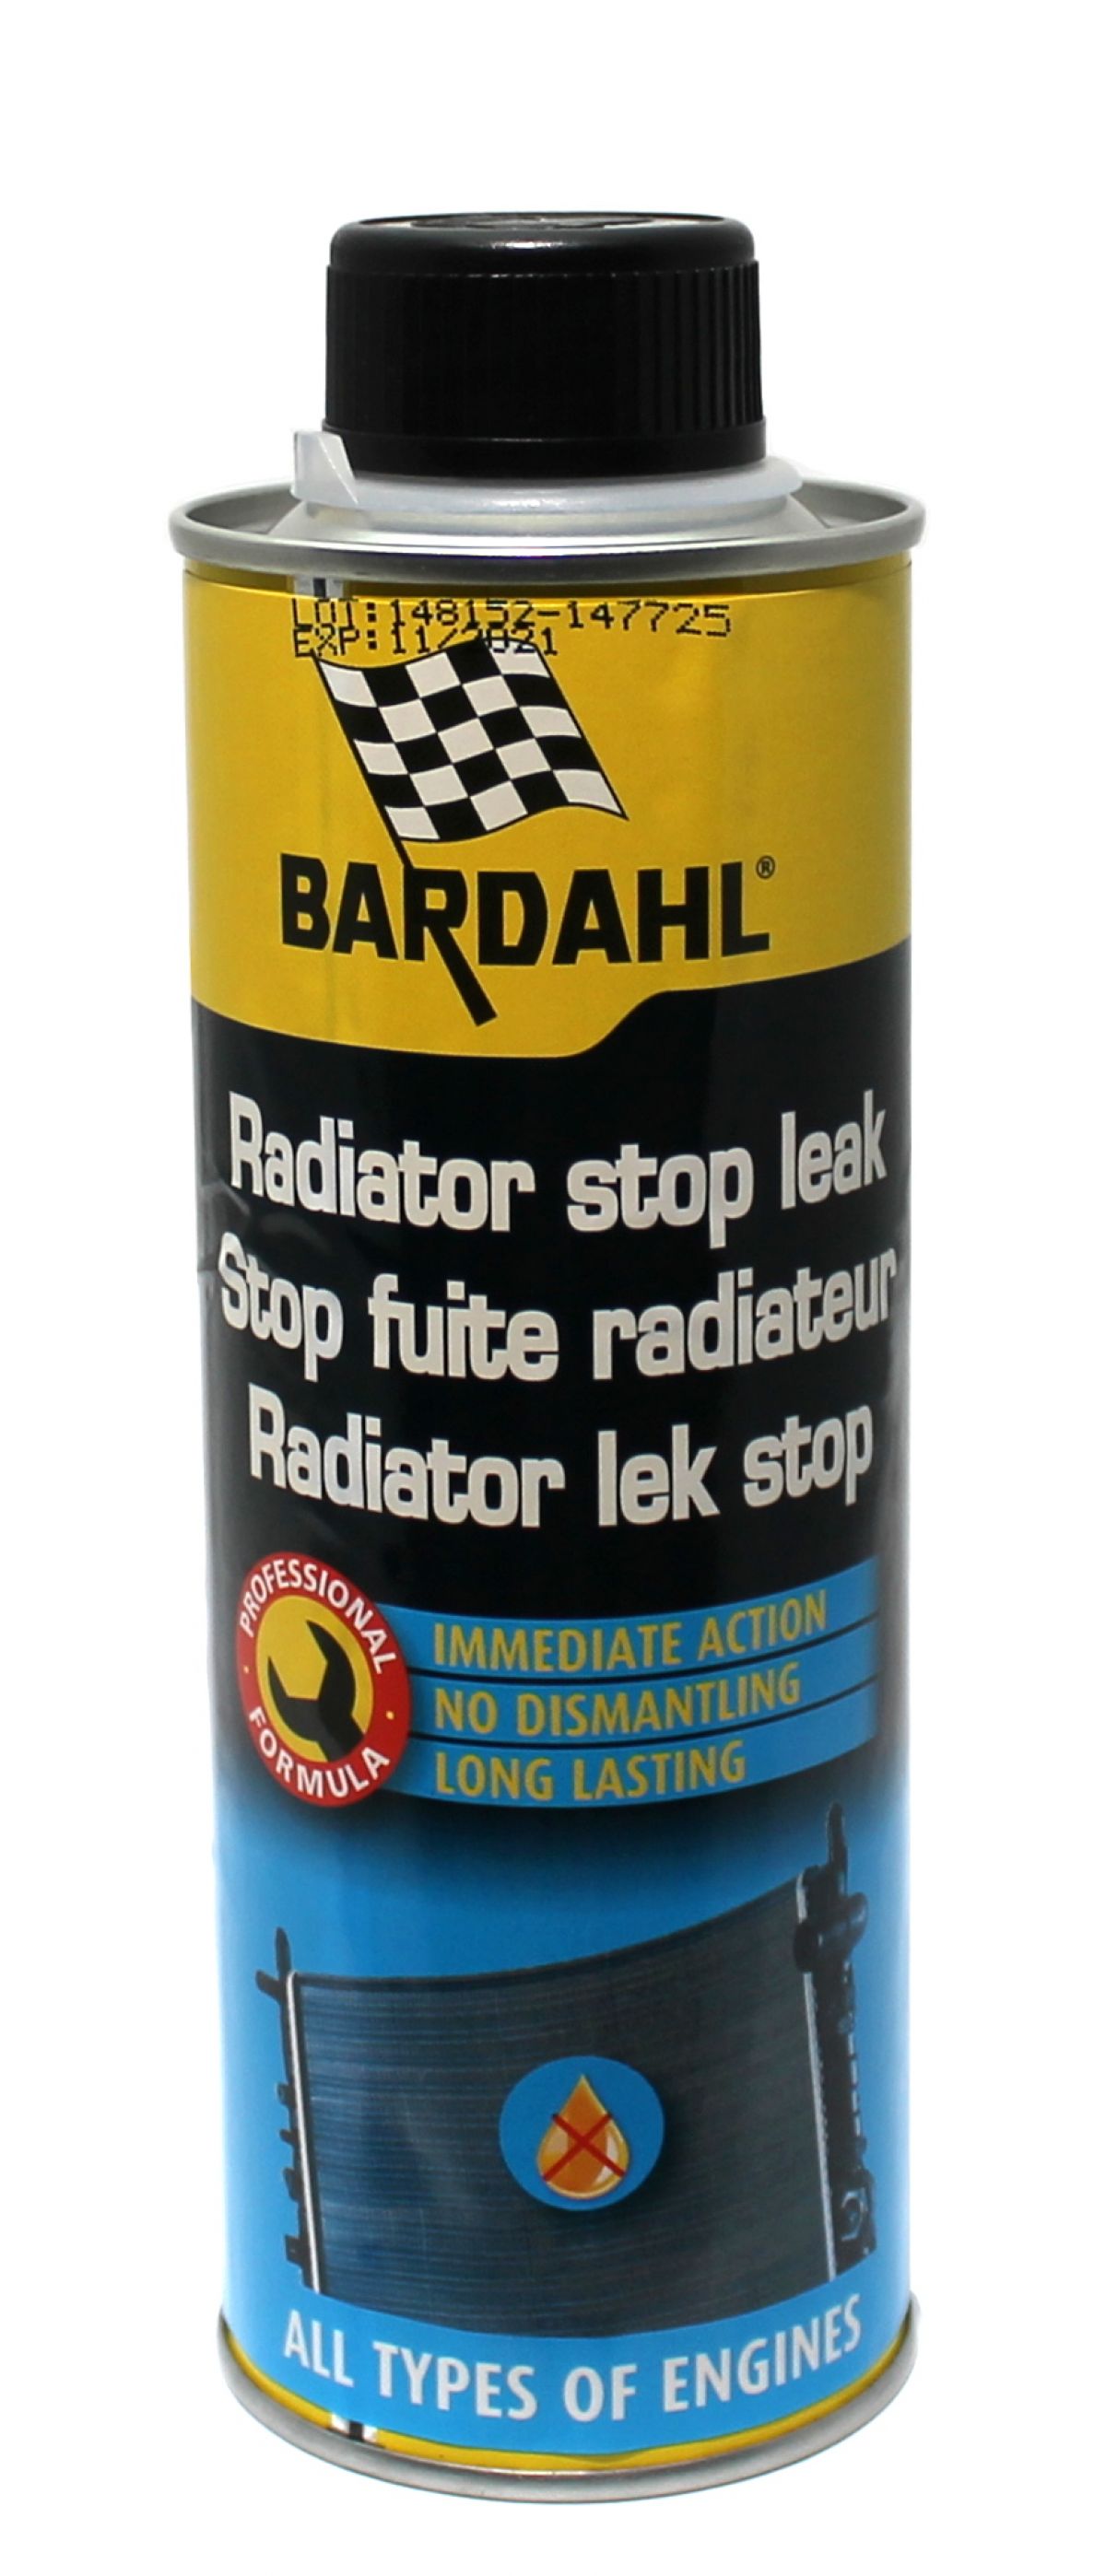 Bardahl Stop-fuite Moteur 300ml